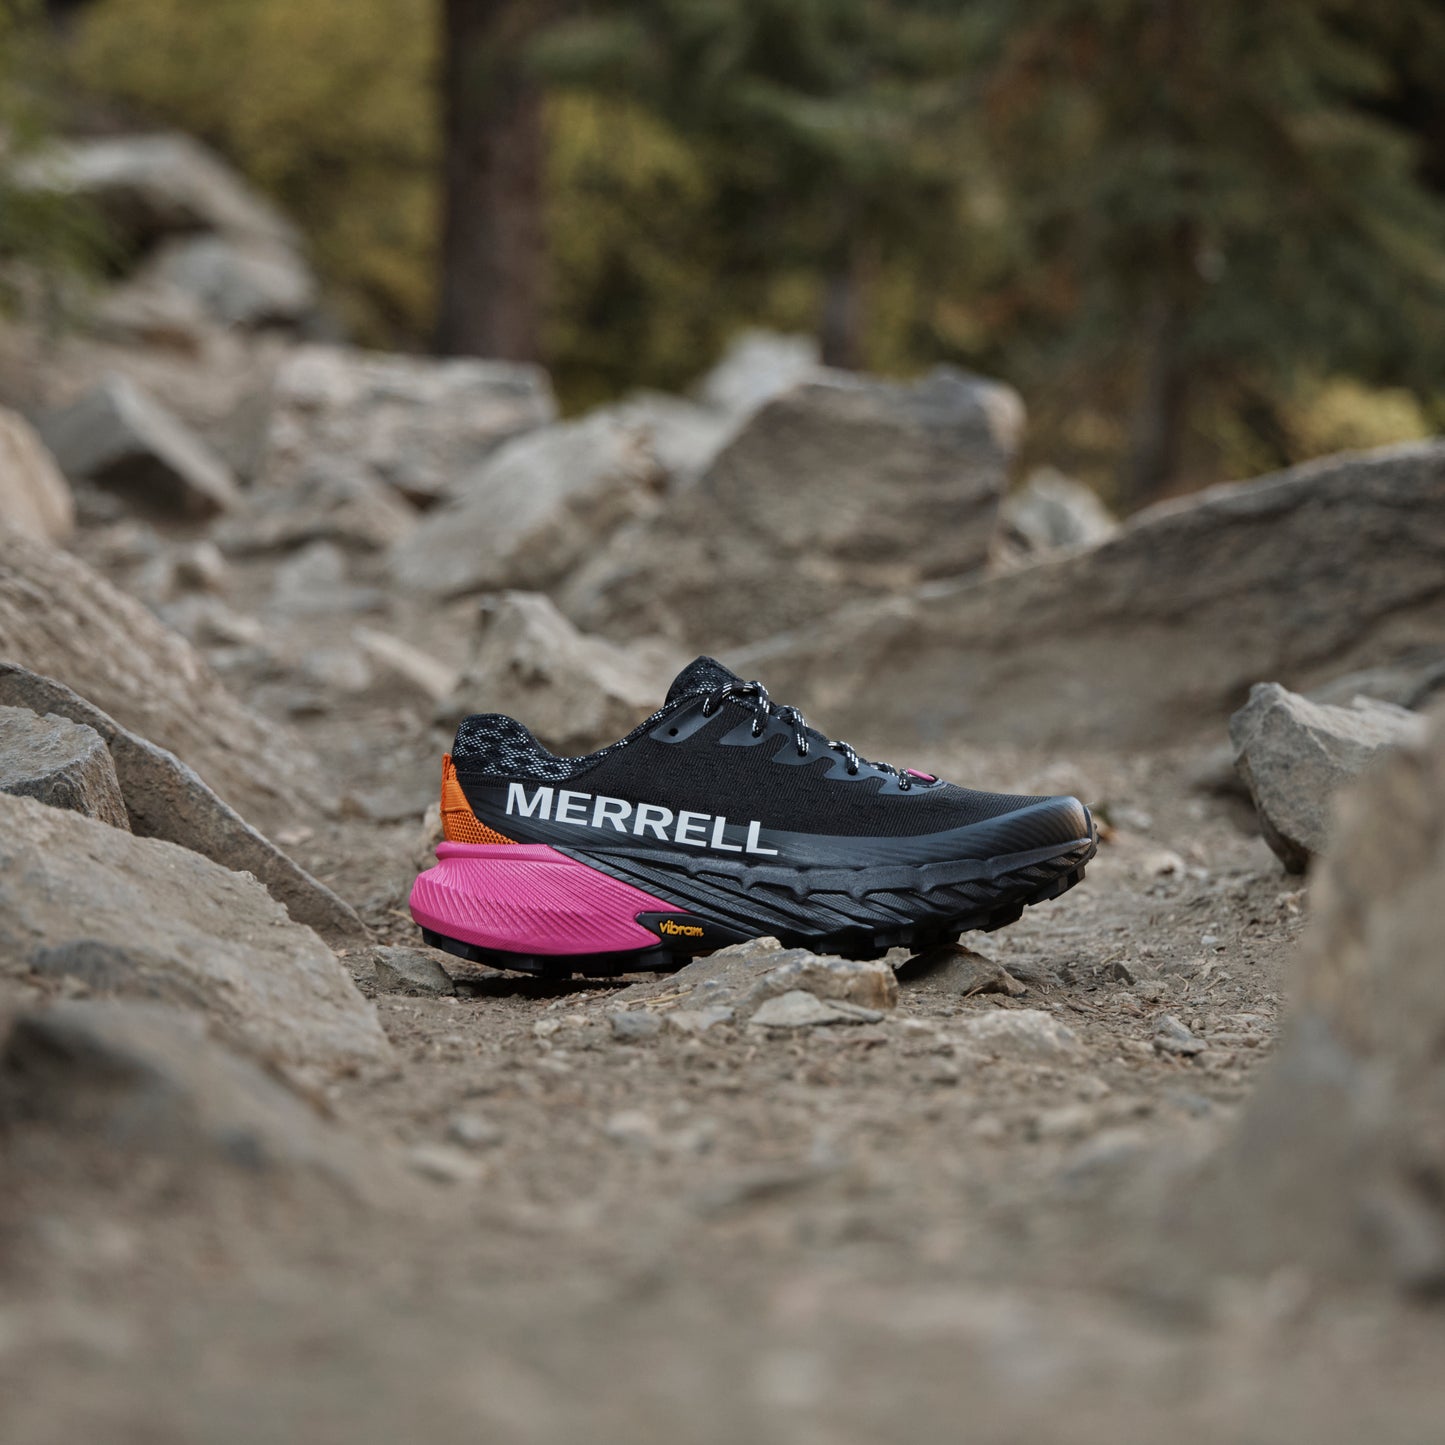 Merrell - Agility Peak 5 - black / multi - chaussures Trail running femmes